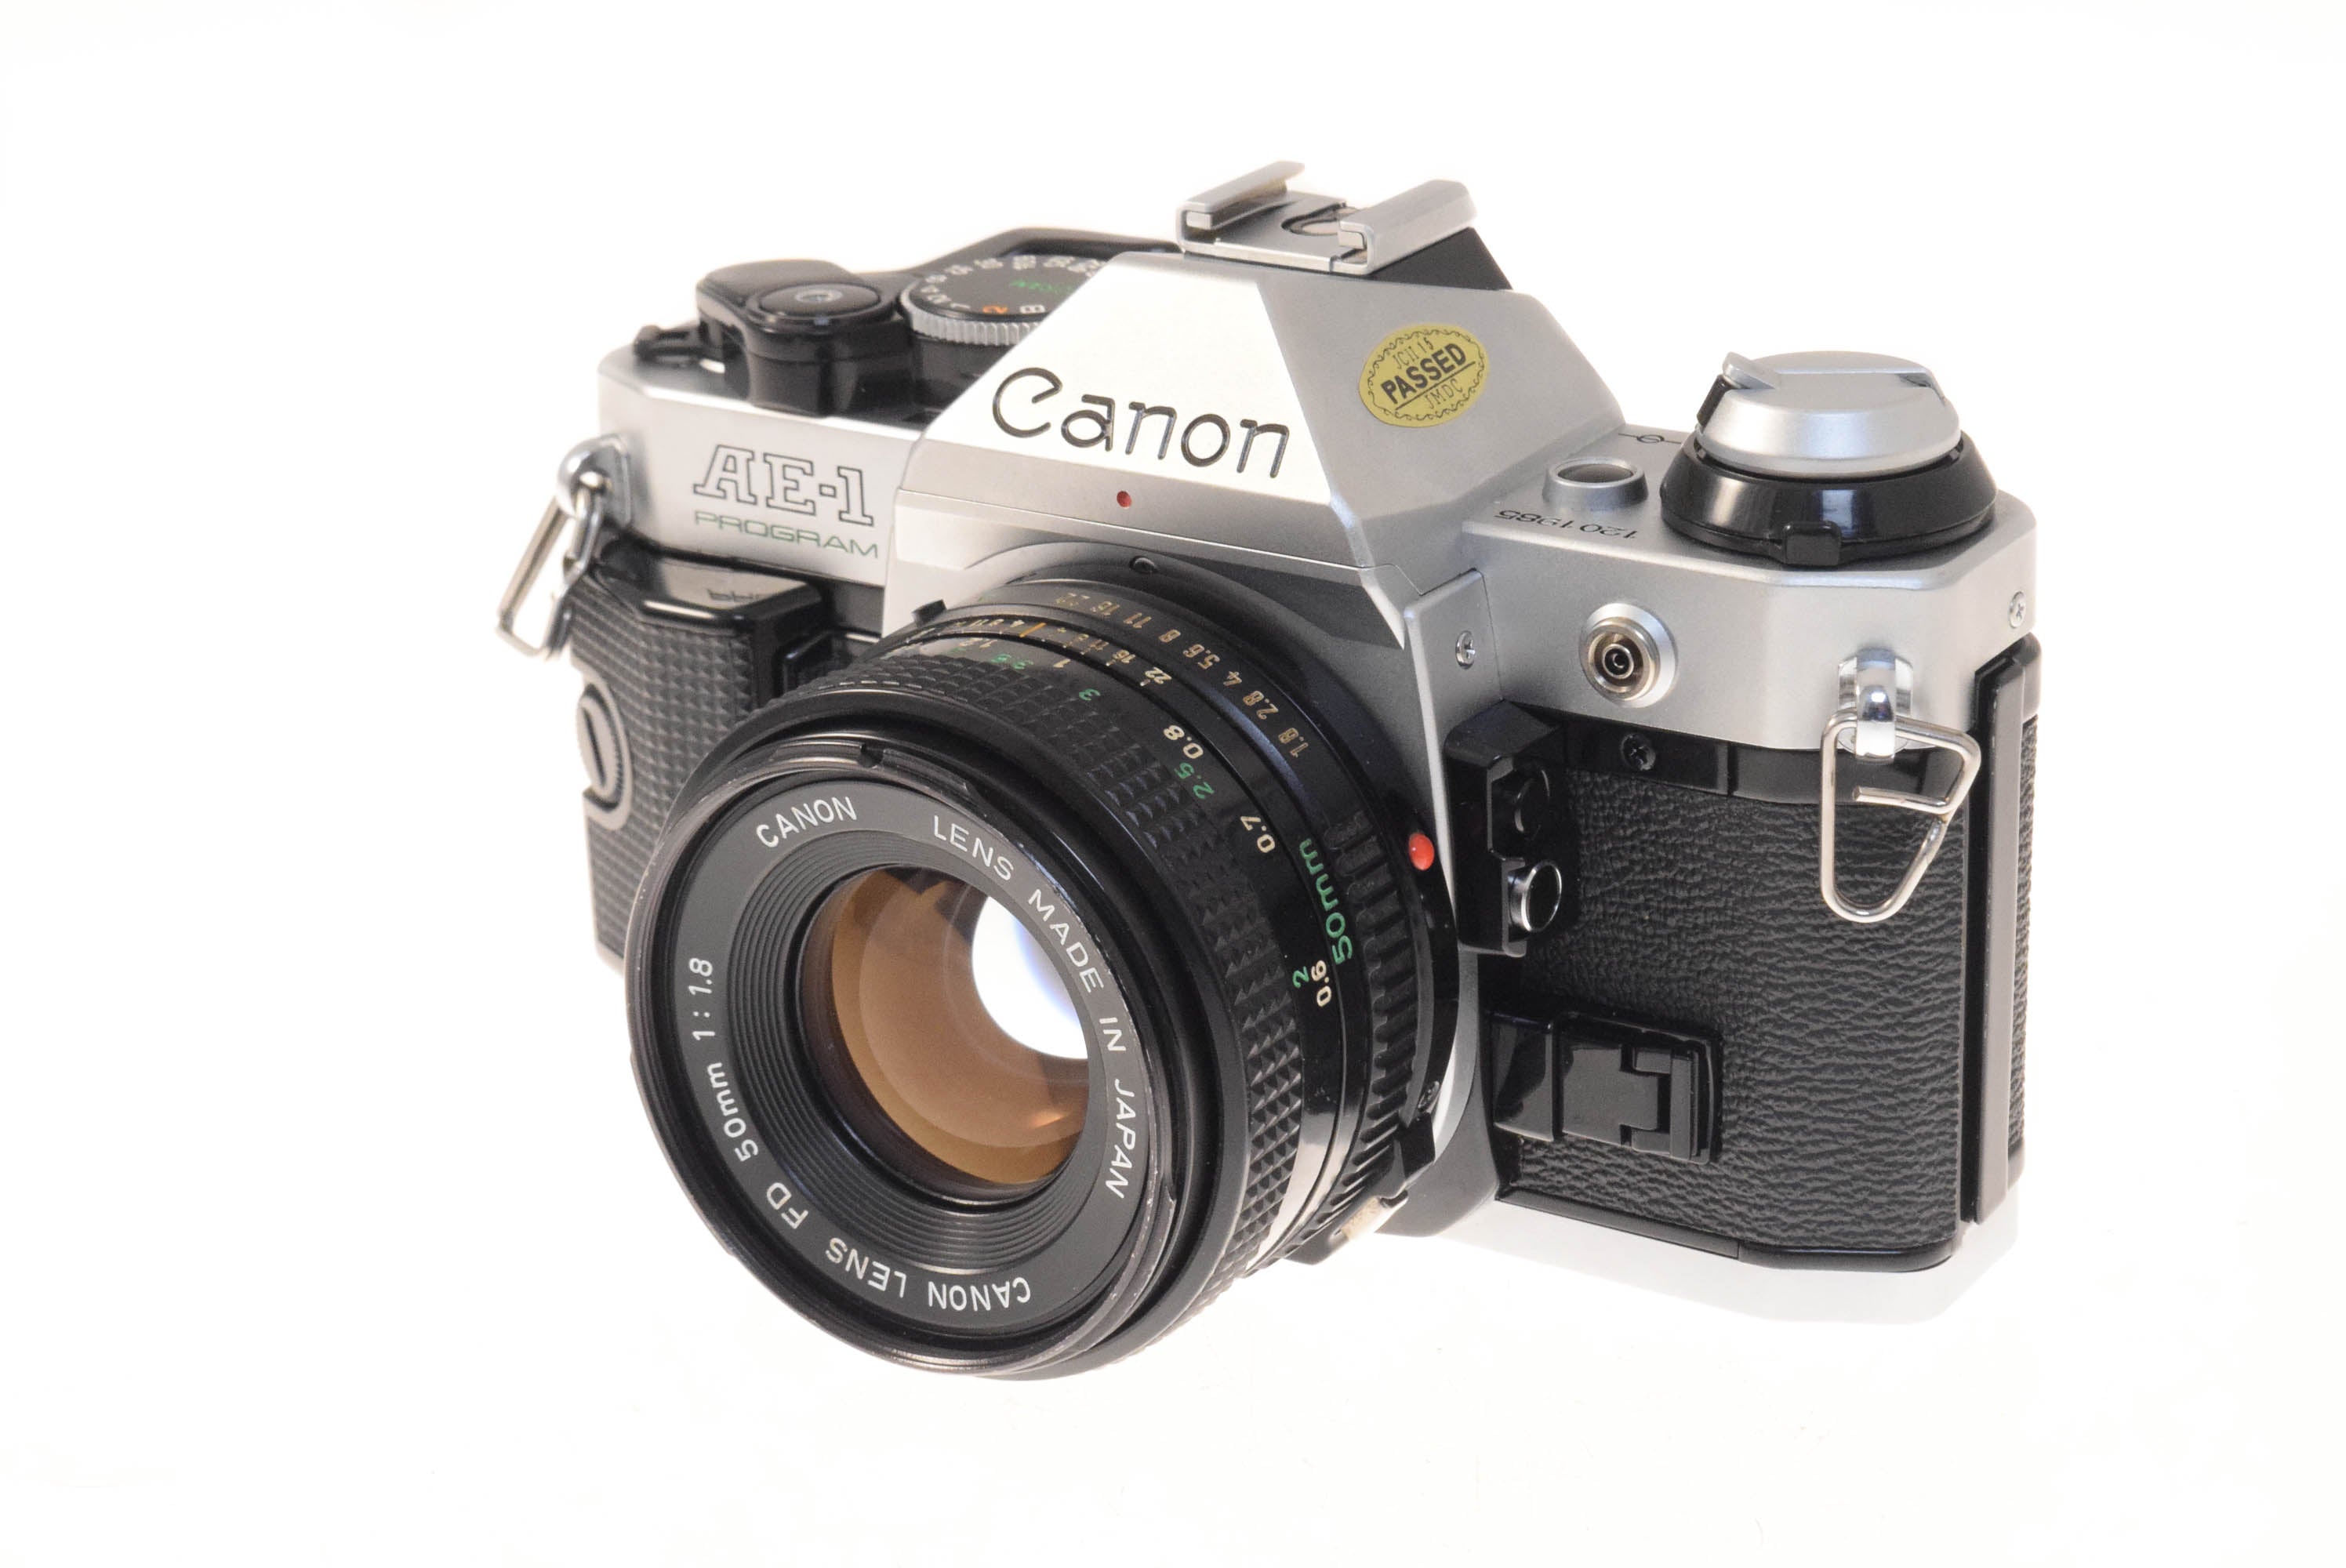 Canon AE-1 Program - Camera – Kamerastore